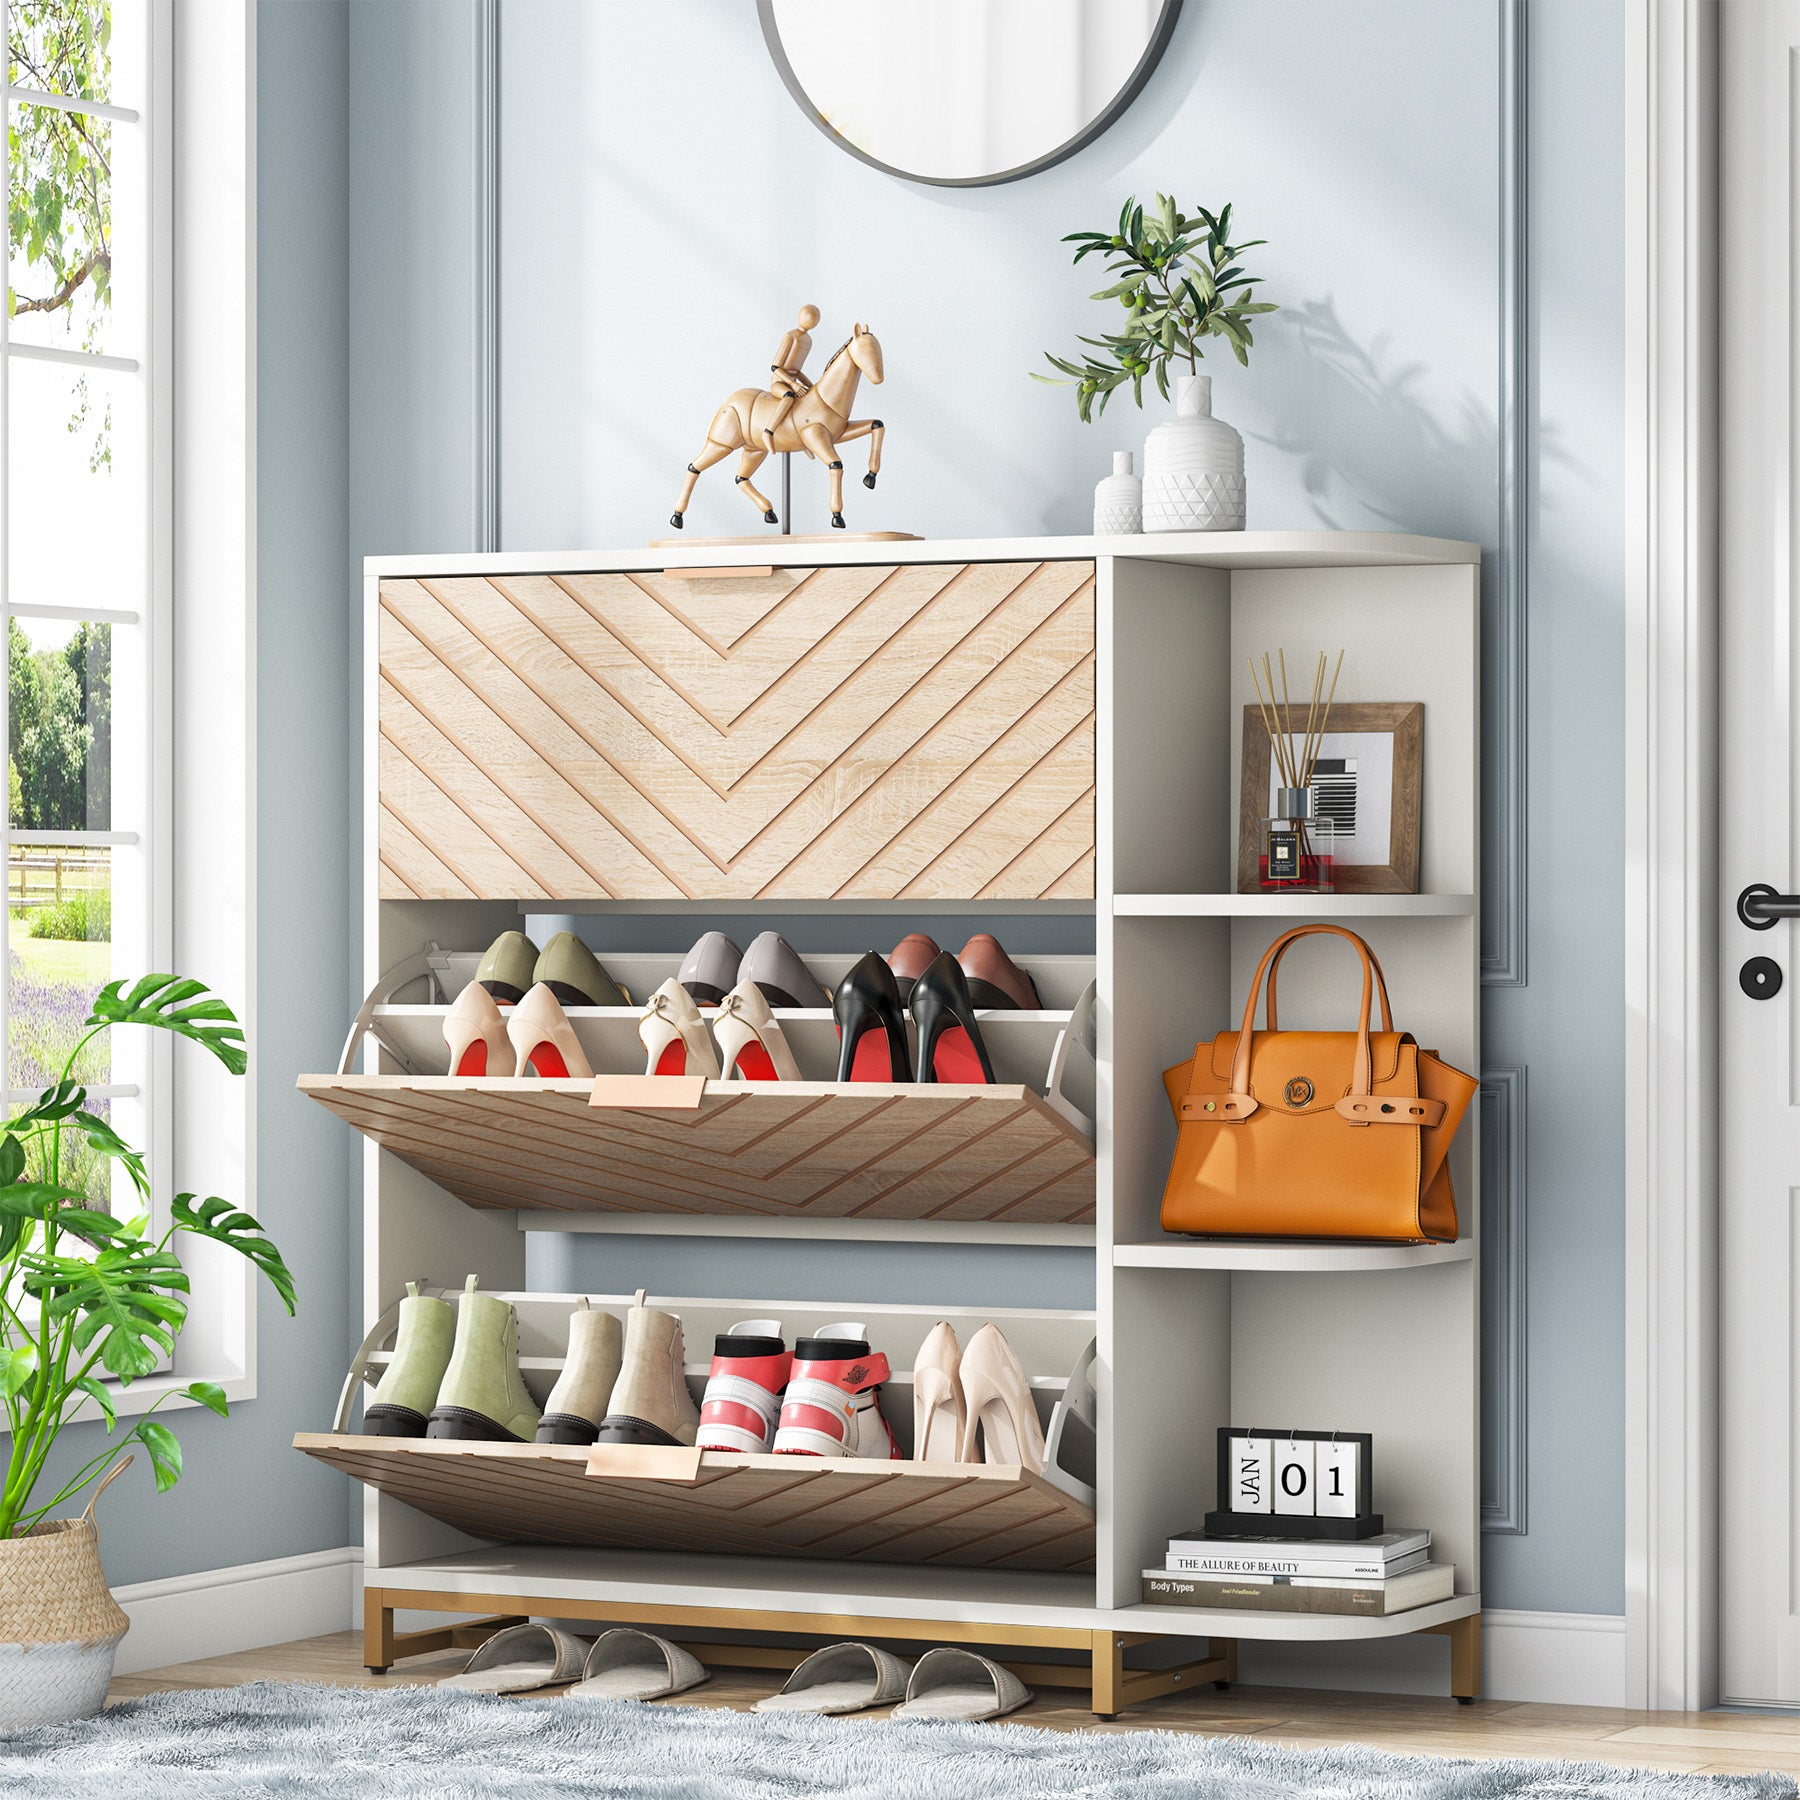 Modern Shoe Cabinet Gray & Black Shoe Organizer with Doors Shelves